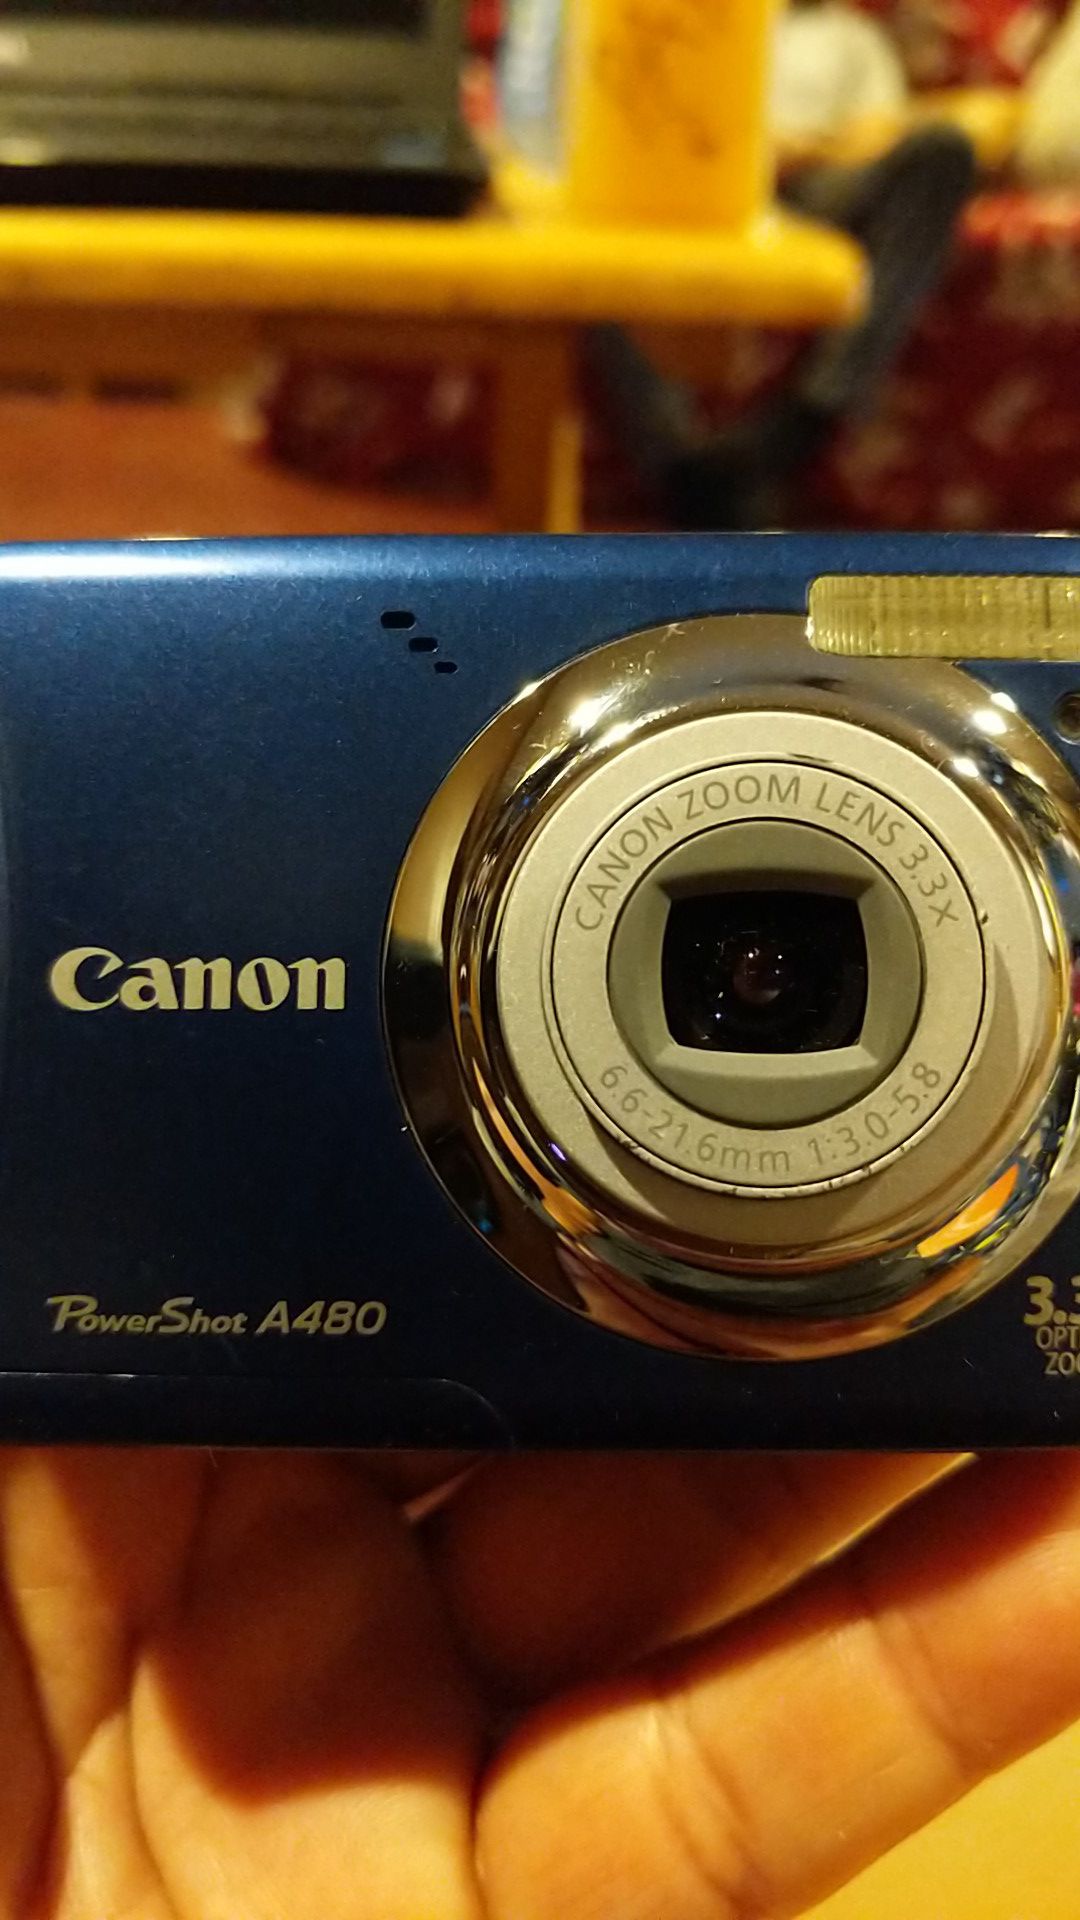 PowerShot A480 digital camera